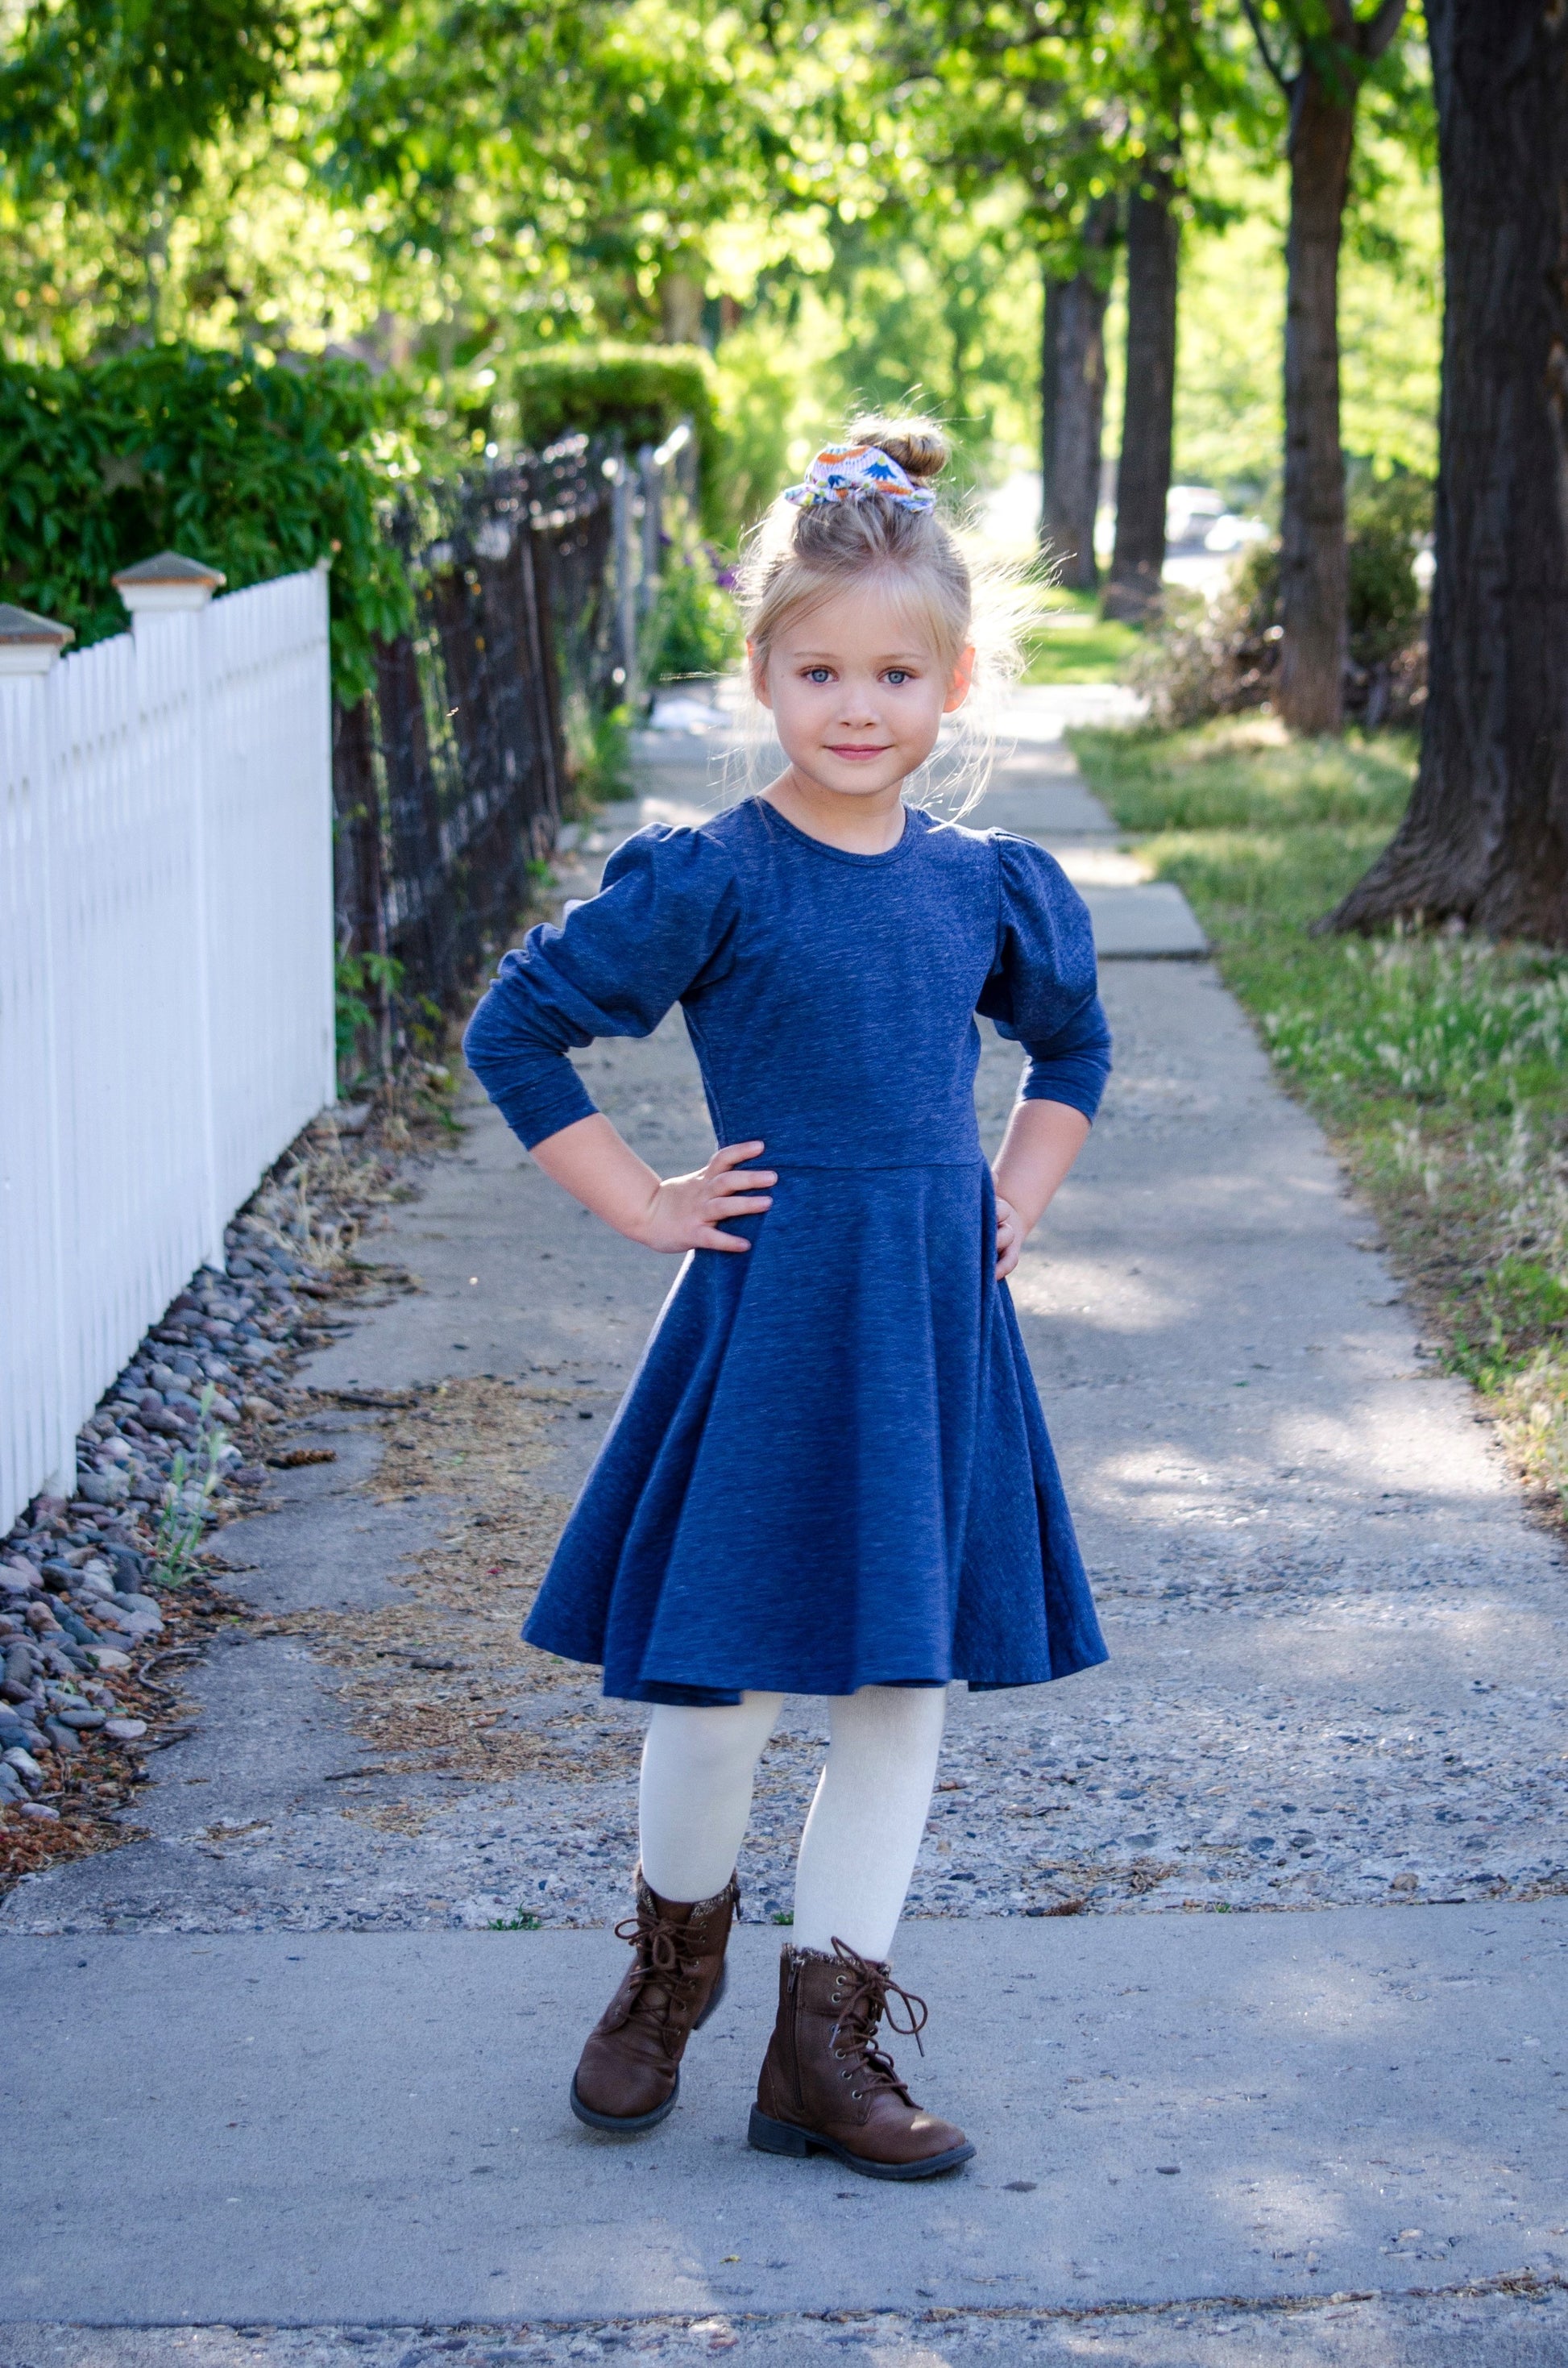 Girl in a blue dress posing on a sidewalk.